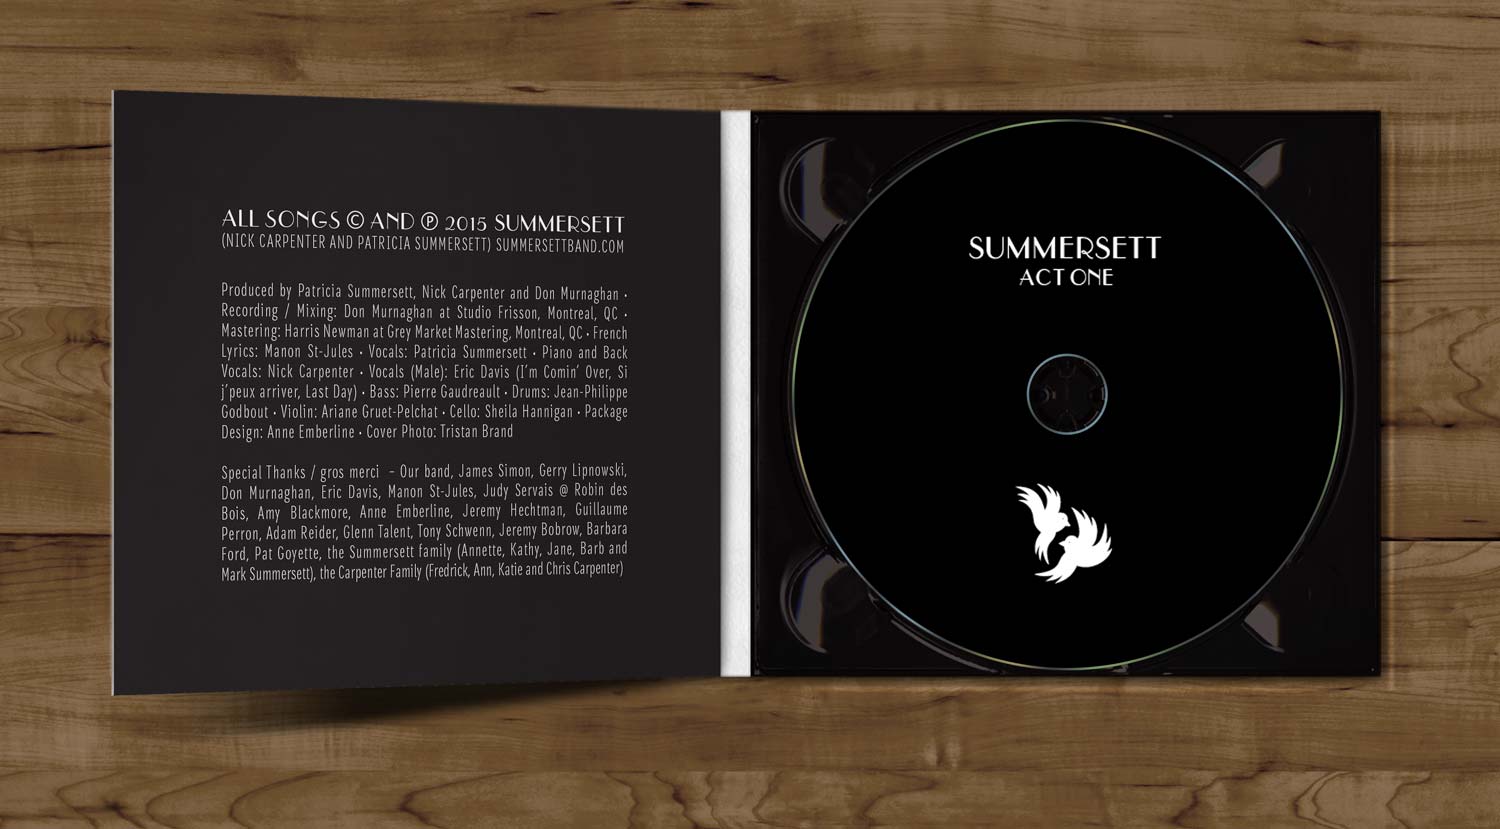 Album packaging for Summersett